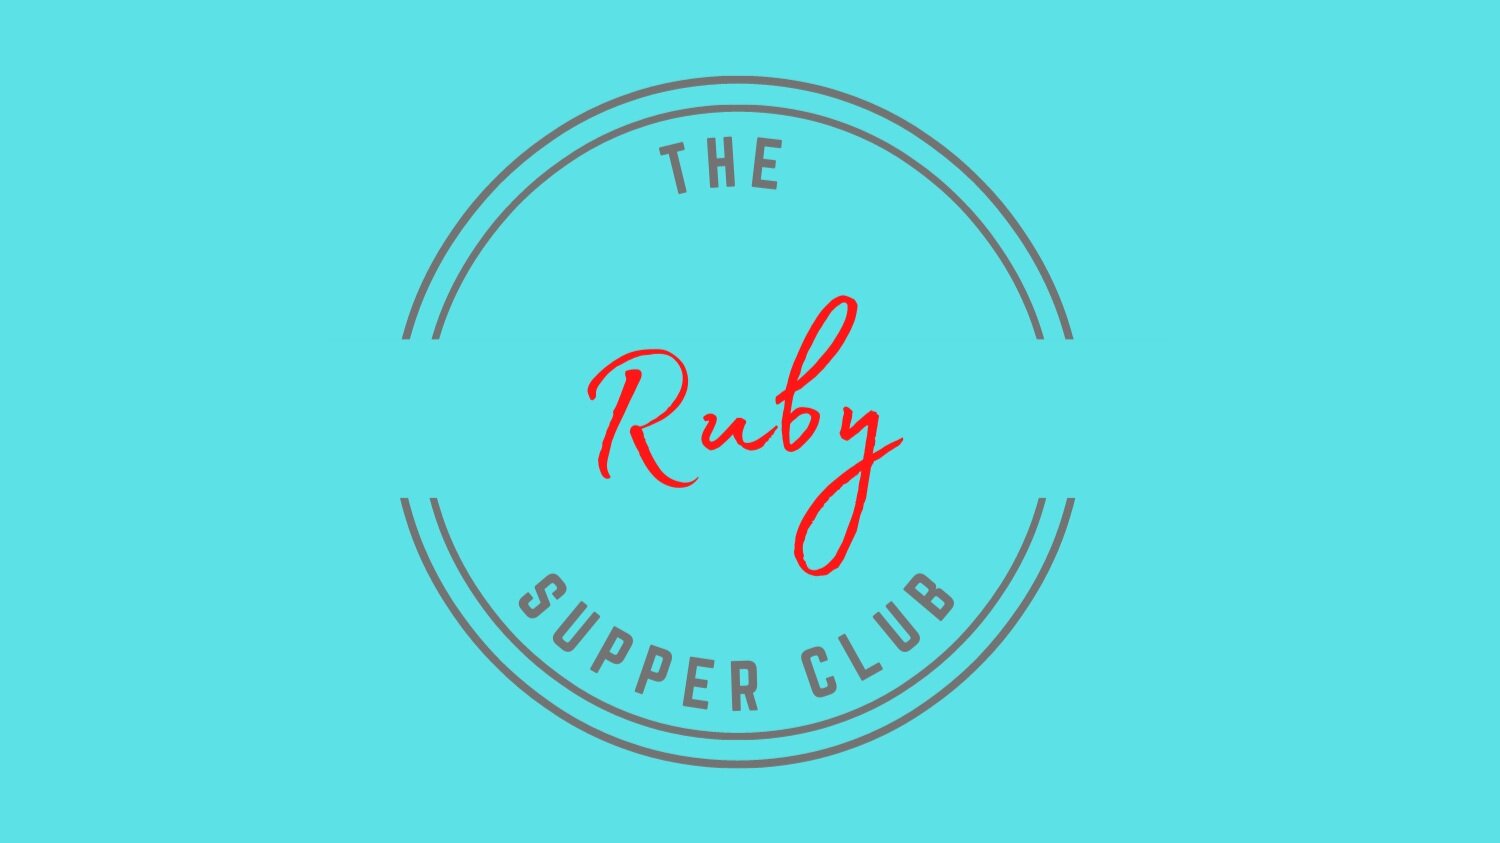 The Ruby Supper Club